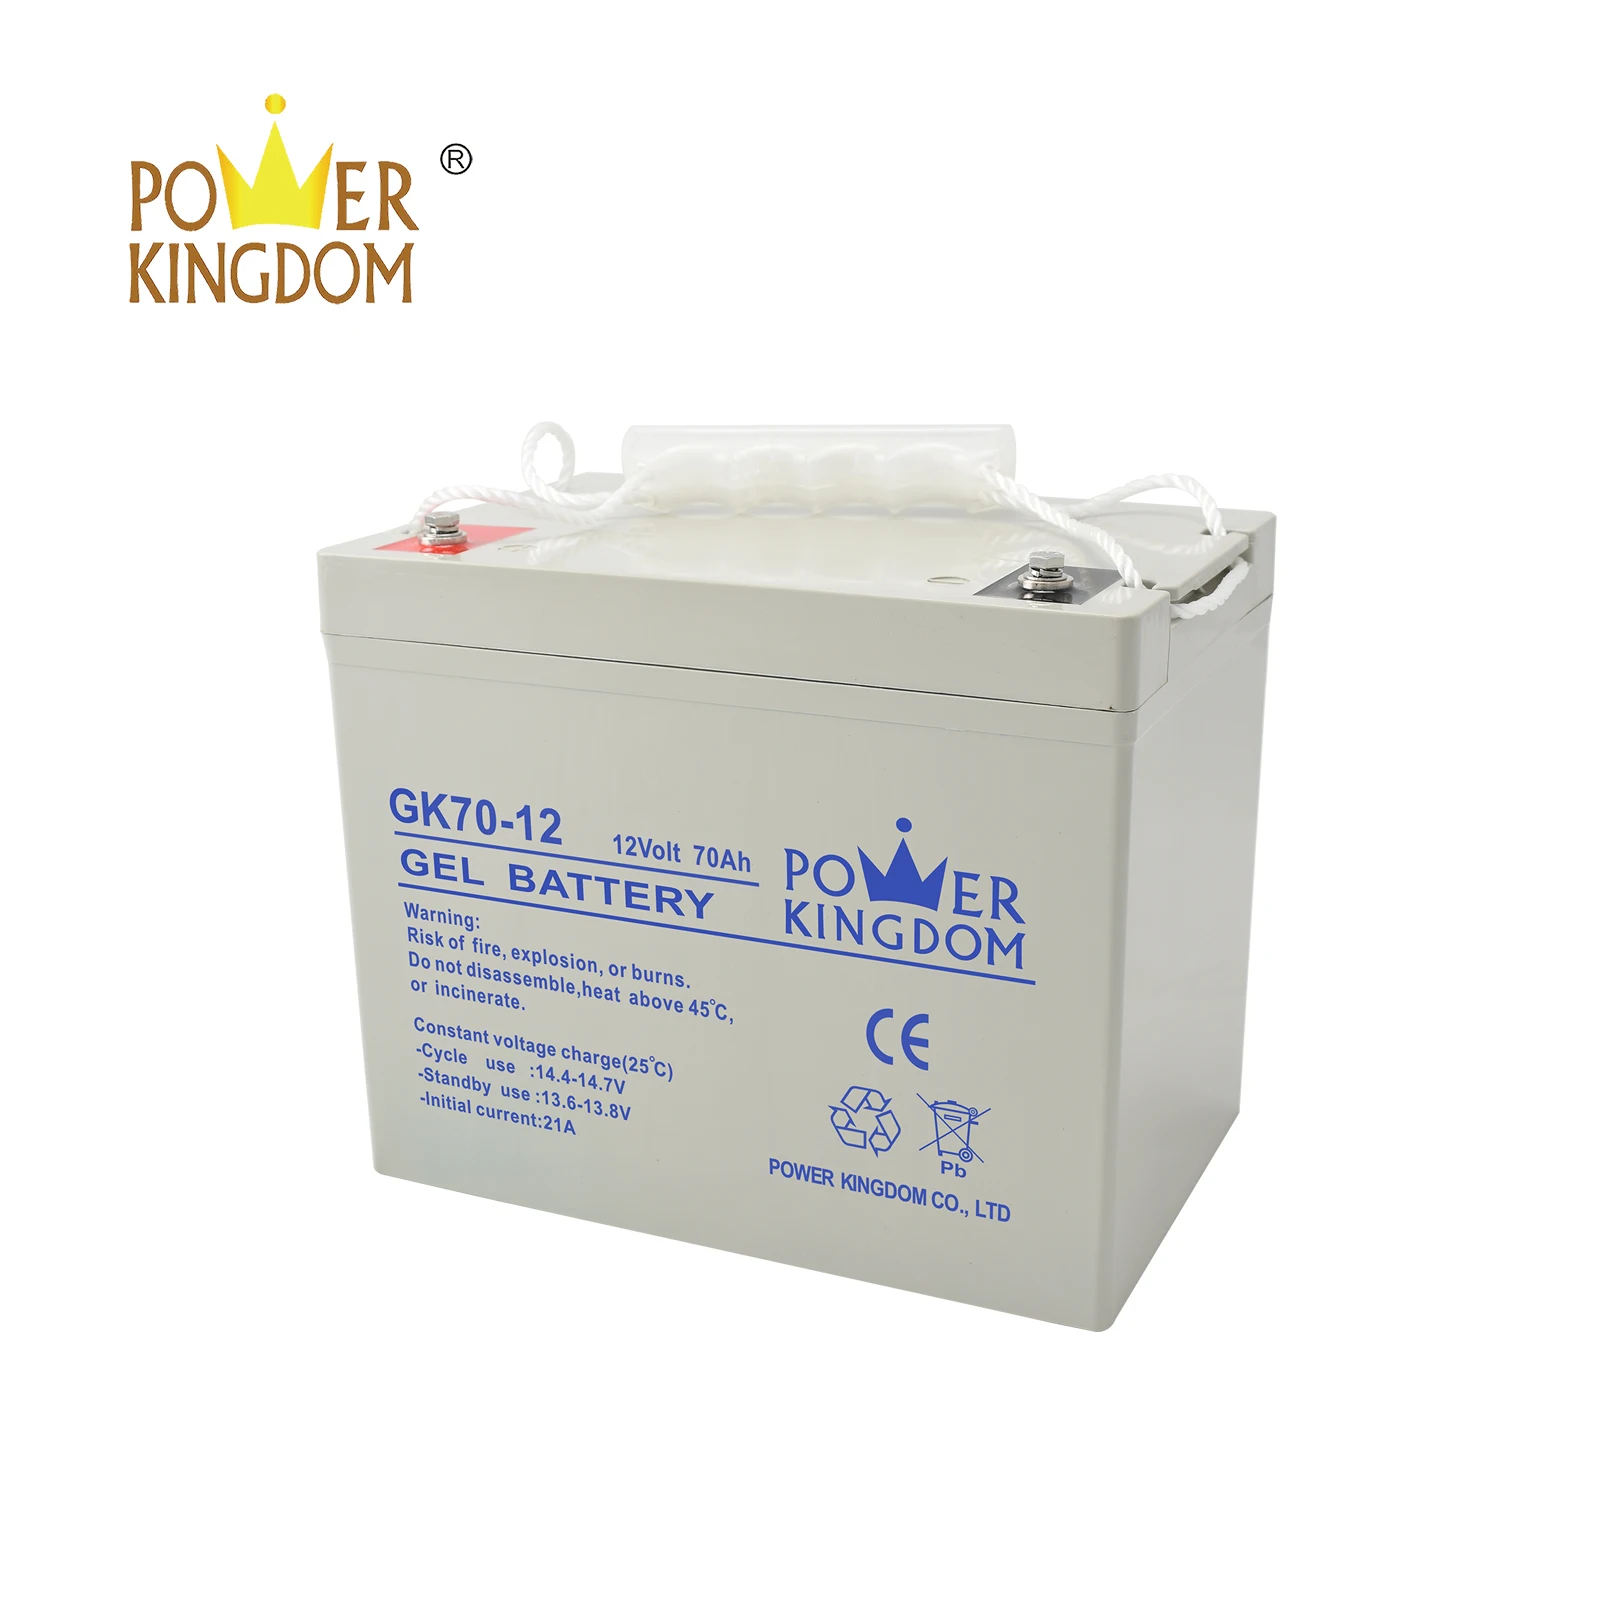 Power Kingdom panasonic sealed lead acid battery company solor system